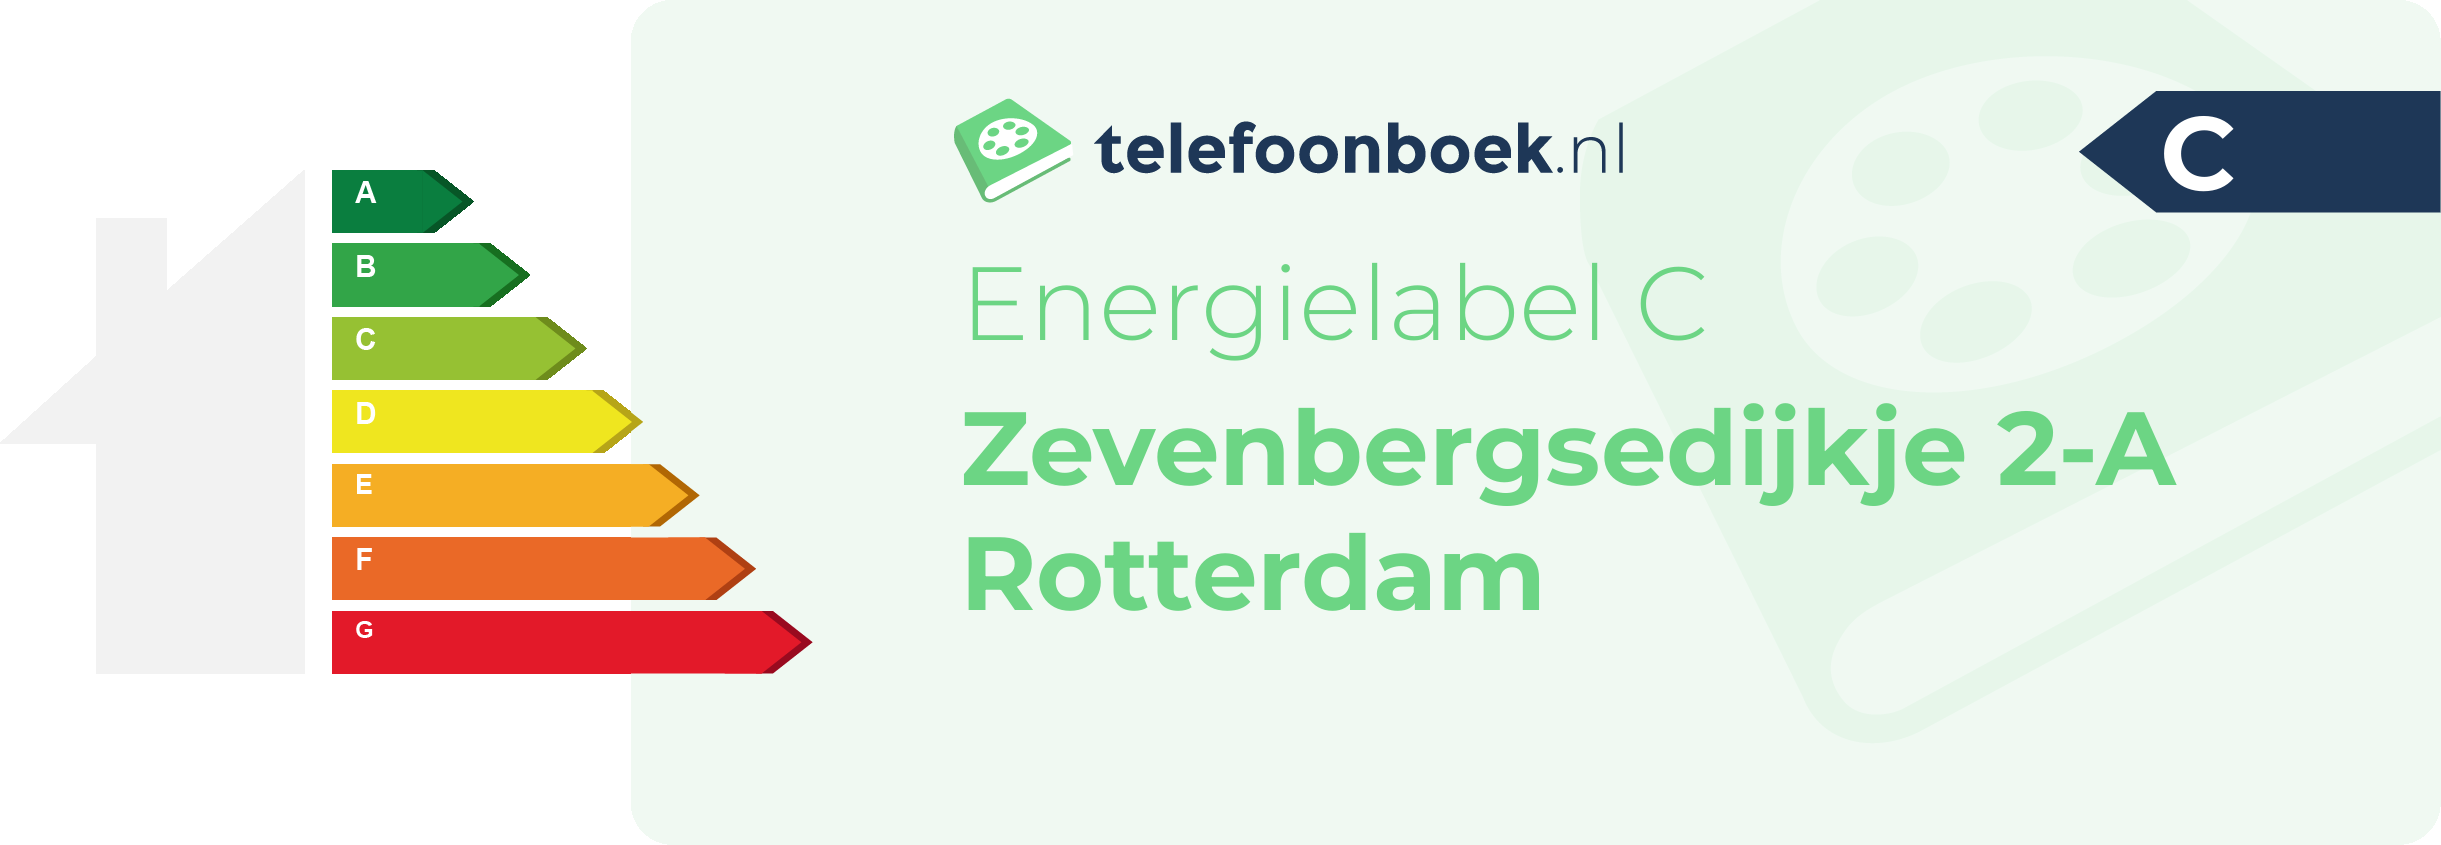 Energielabel Zevenbergsedijkje 2-A Rotterdam